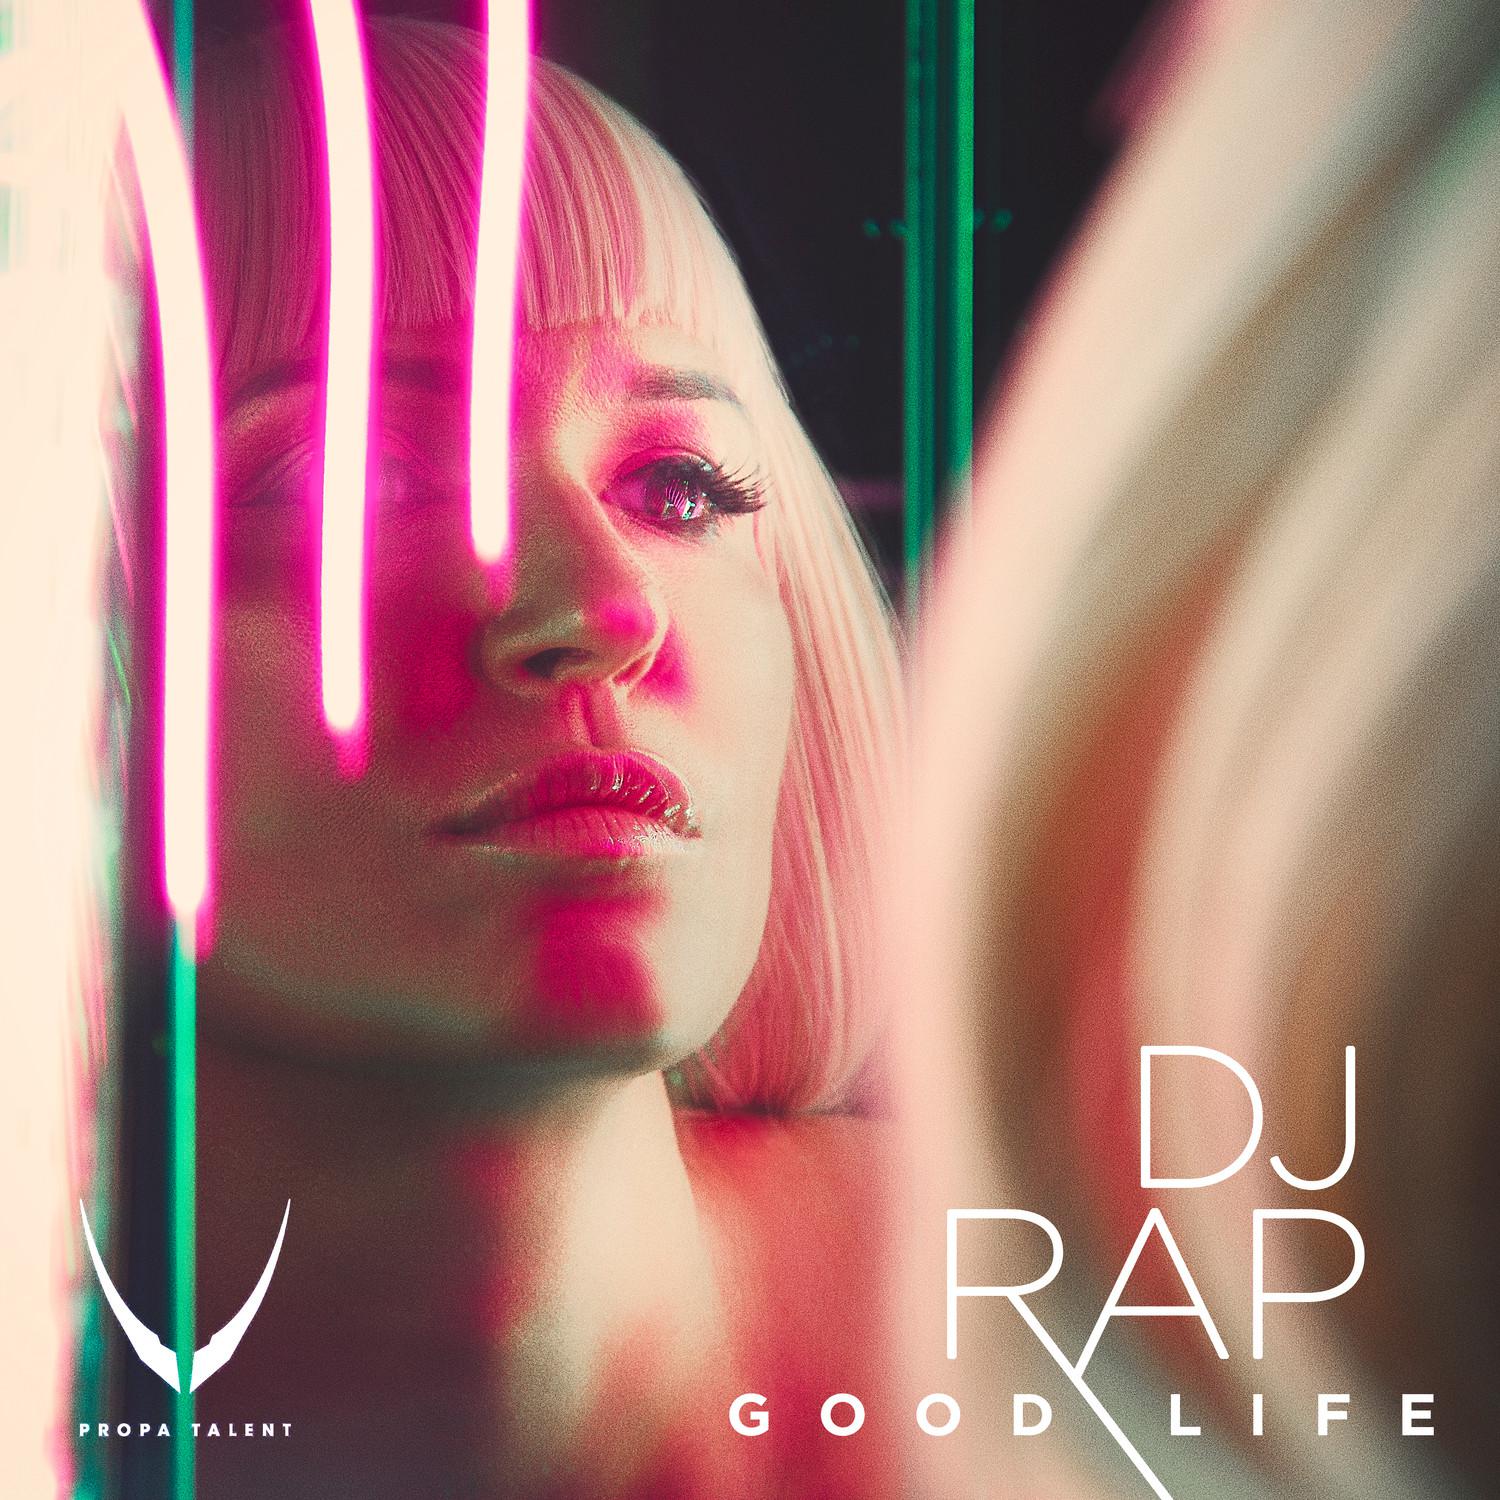 Good Life (DJ Rap Drum And Bass Instrumental Remix)